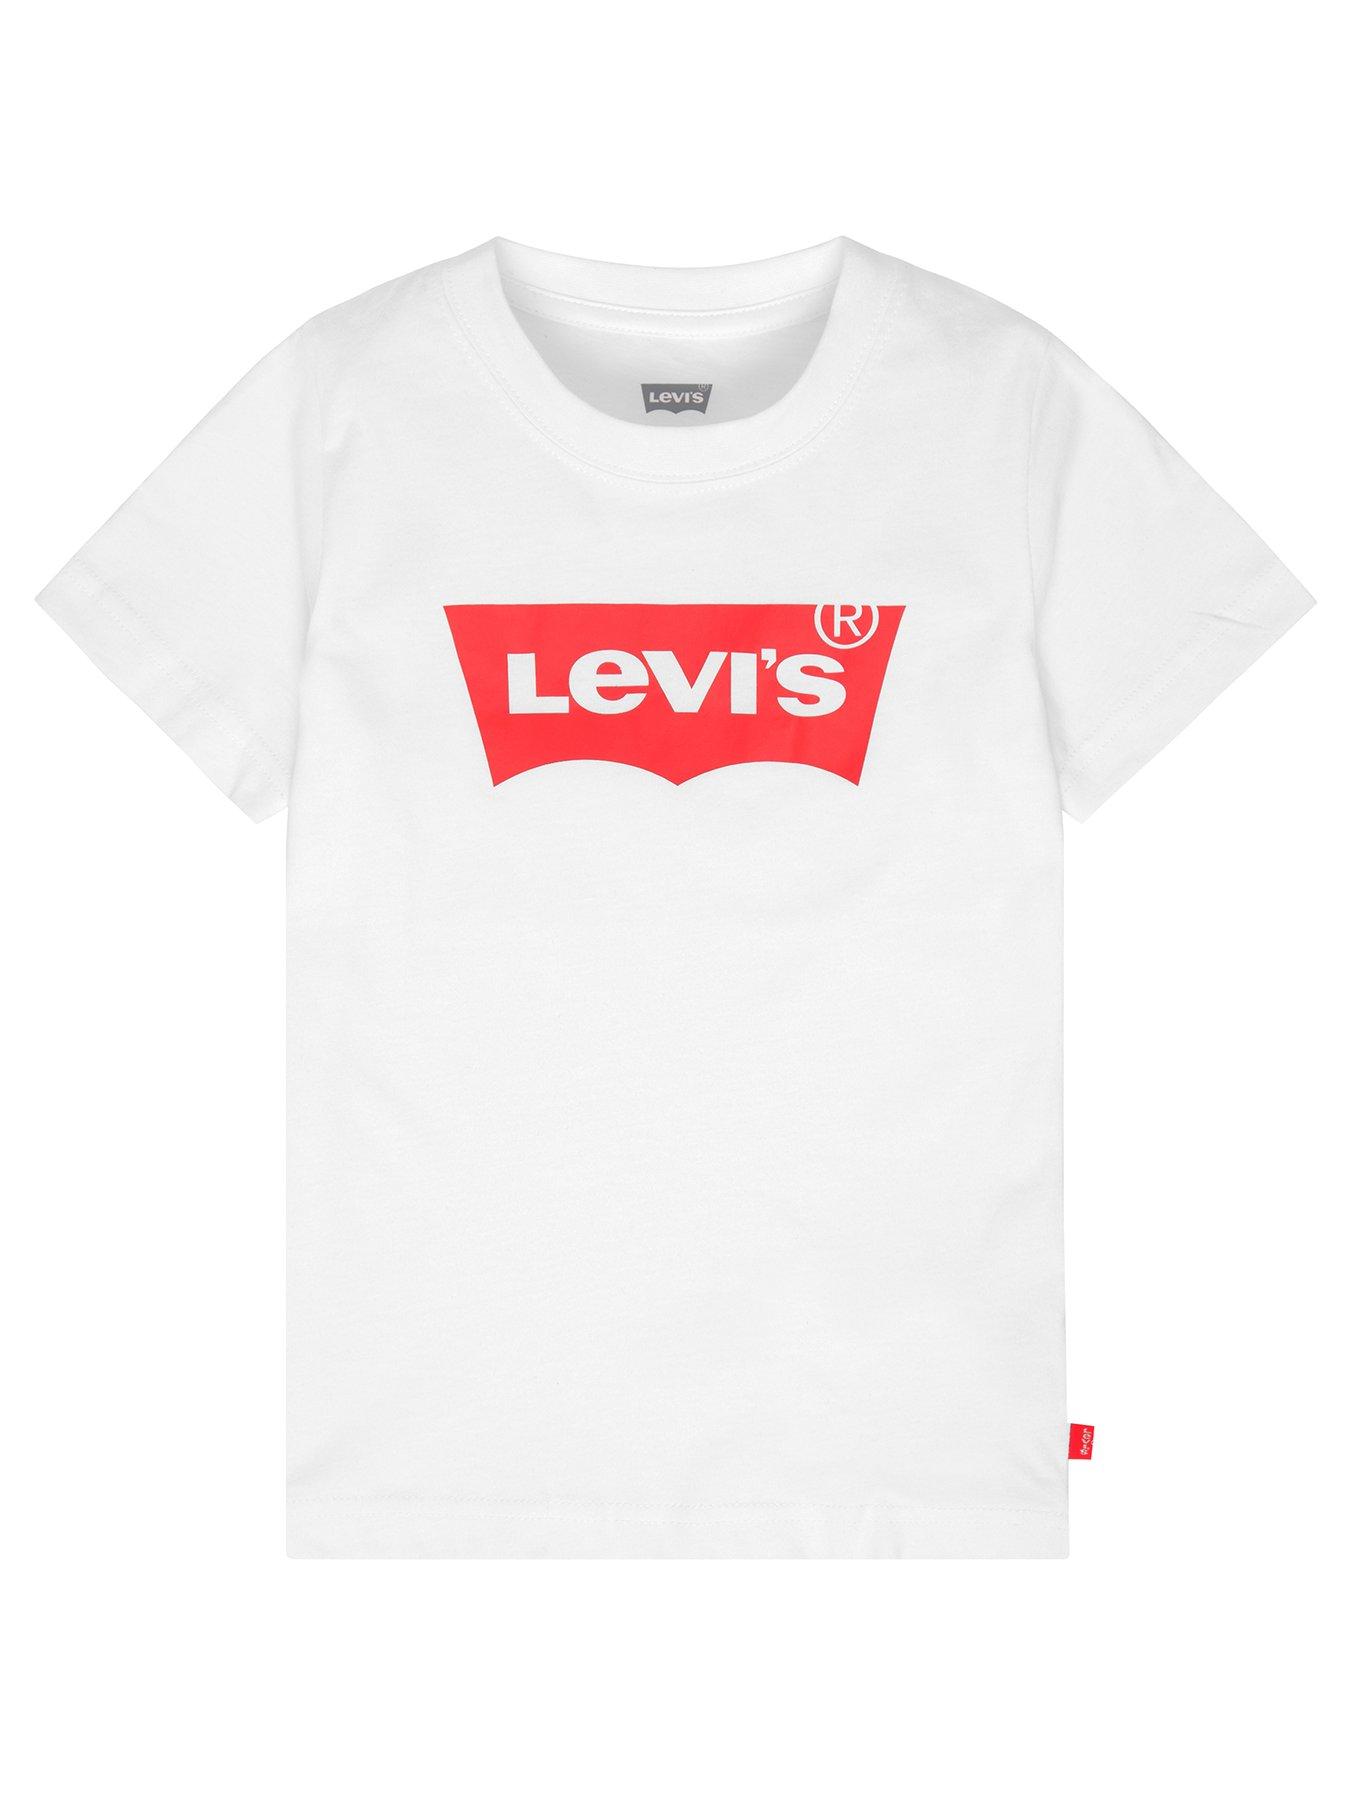 Levi's | Boys clothes | Child & baby | Very Ireland